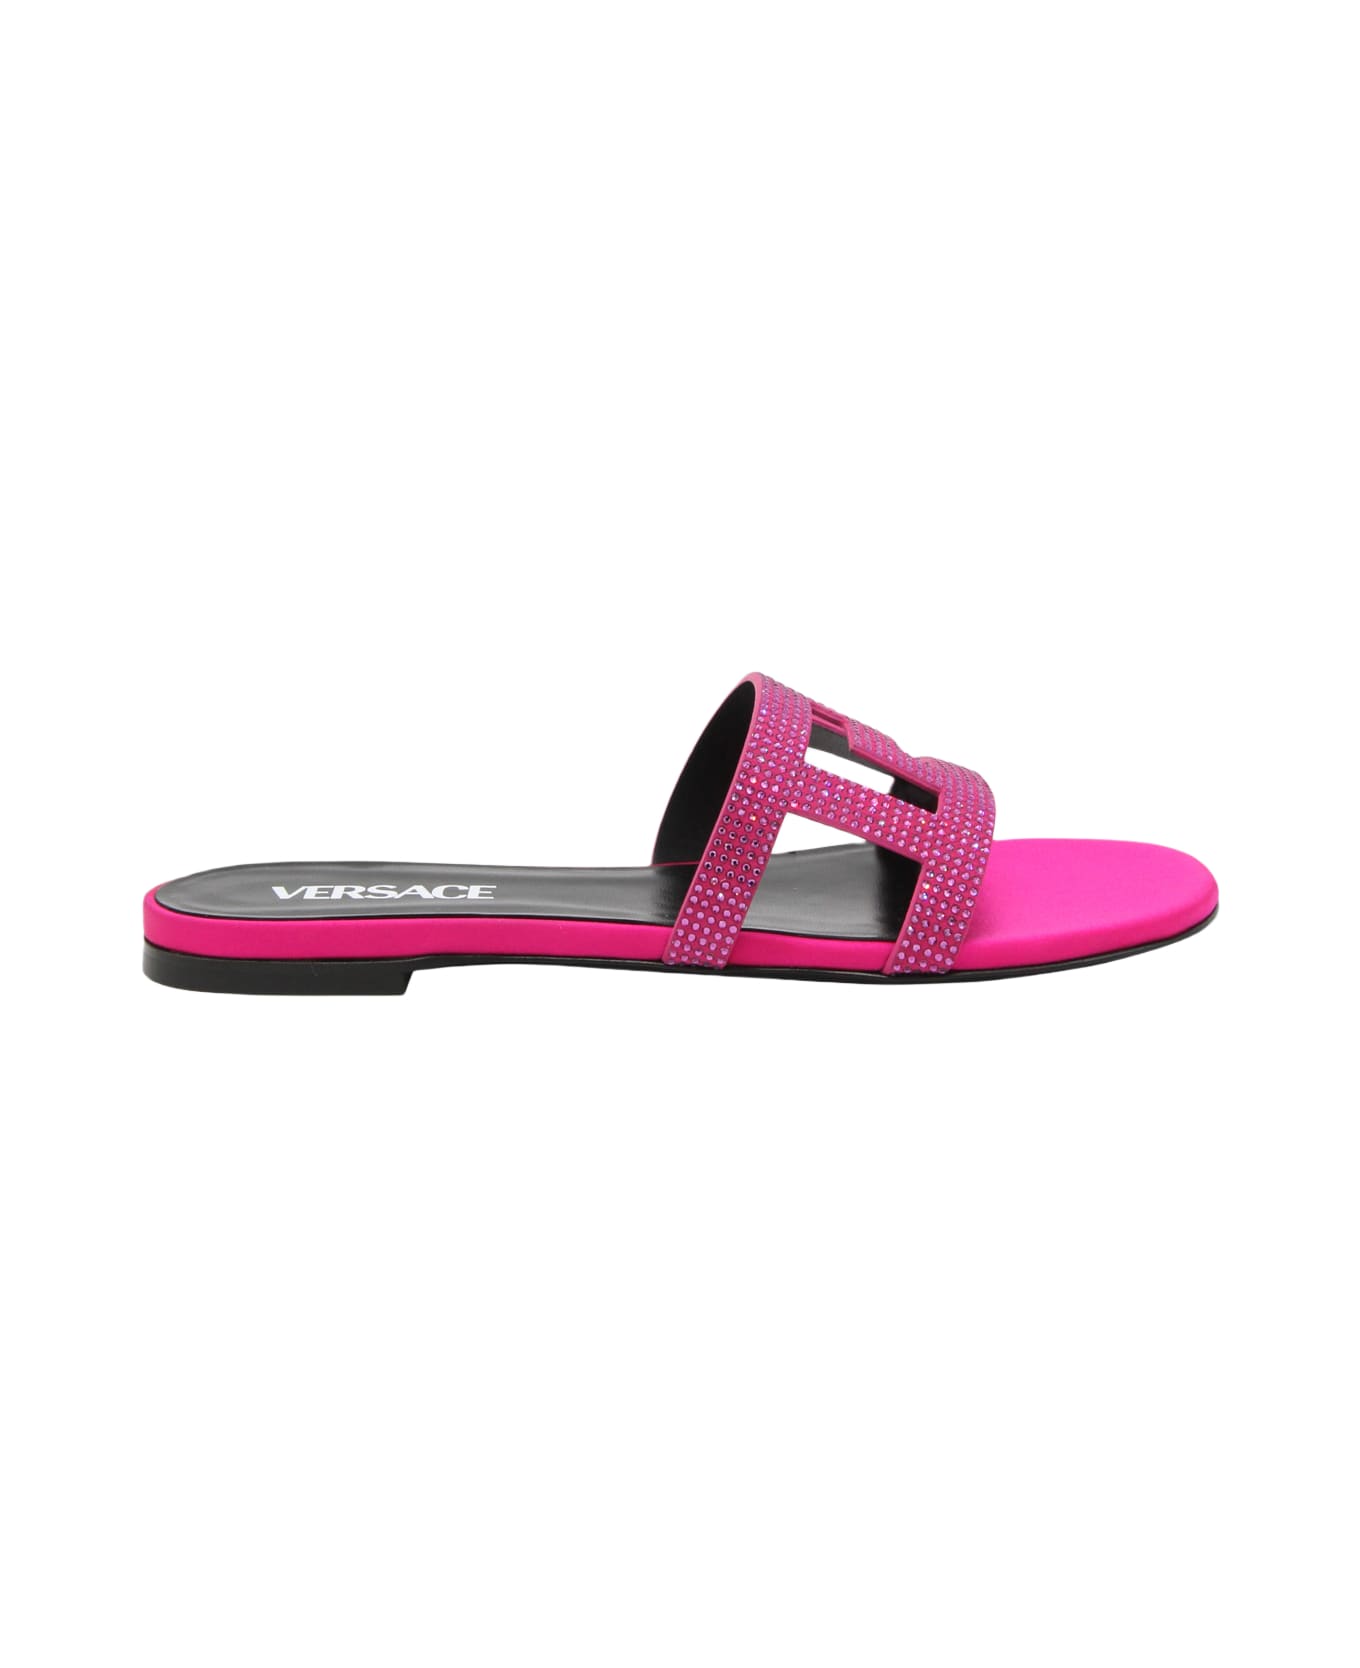 Versace Pink Leather Greca Maze Sandals - GLOSSY PINK-ORO VERSACE サンダル